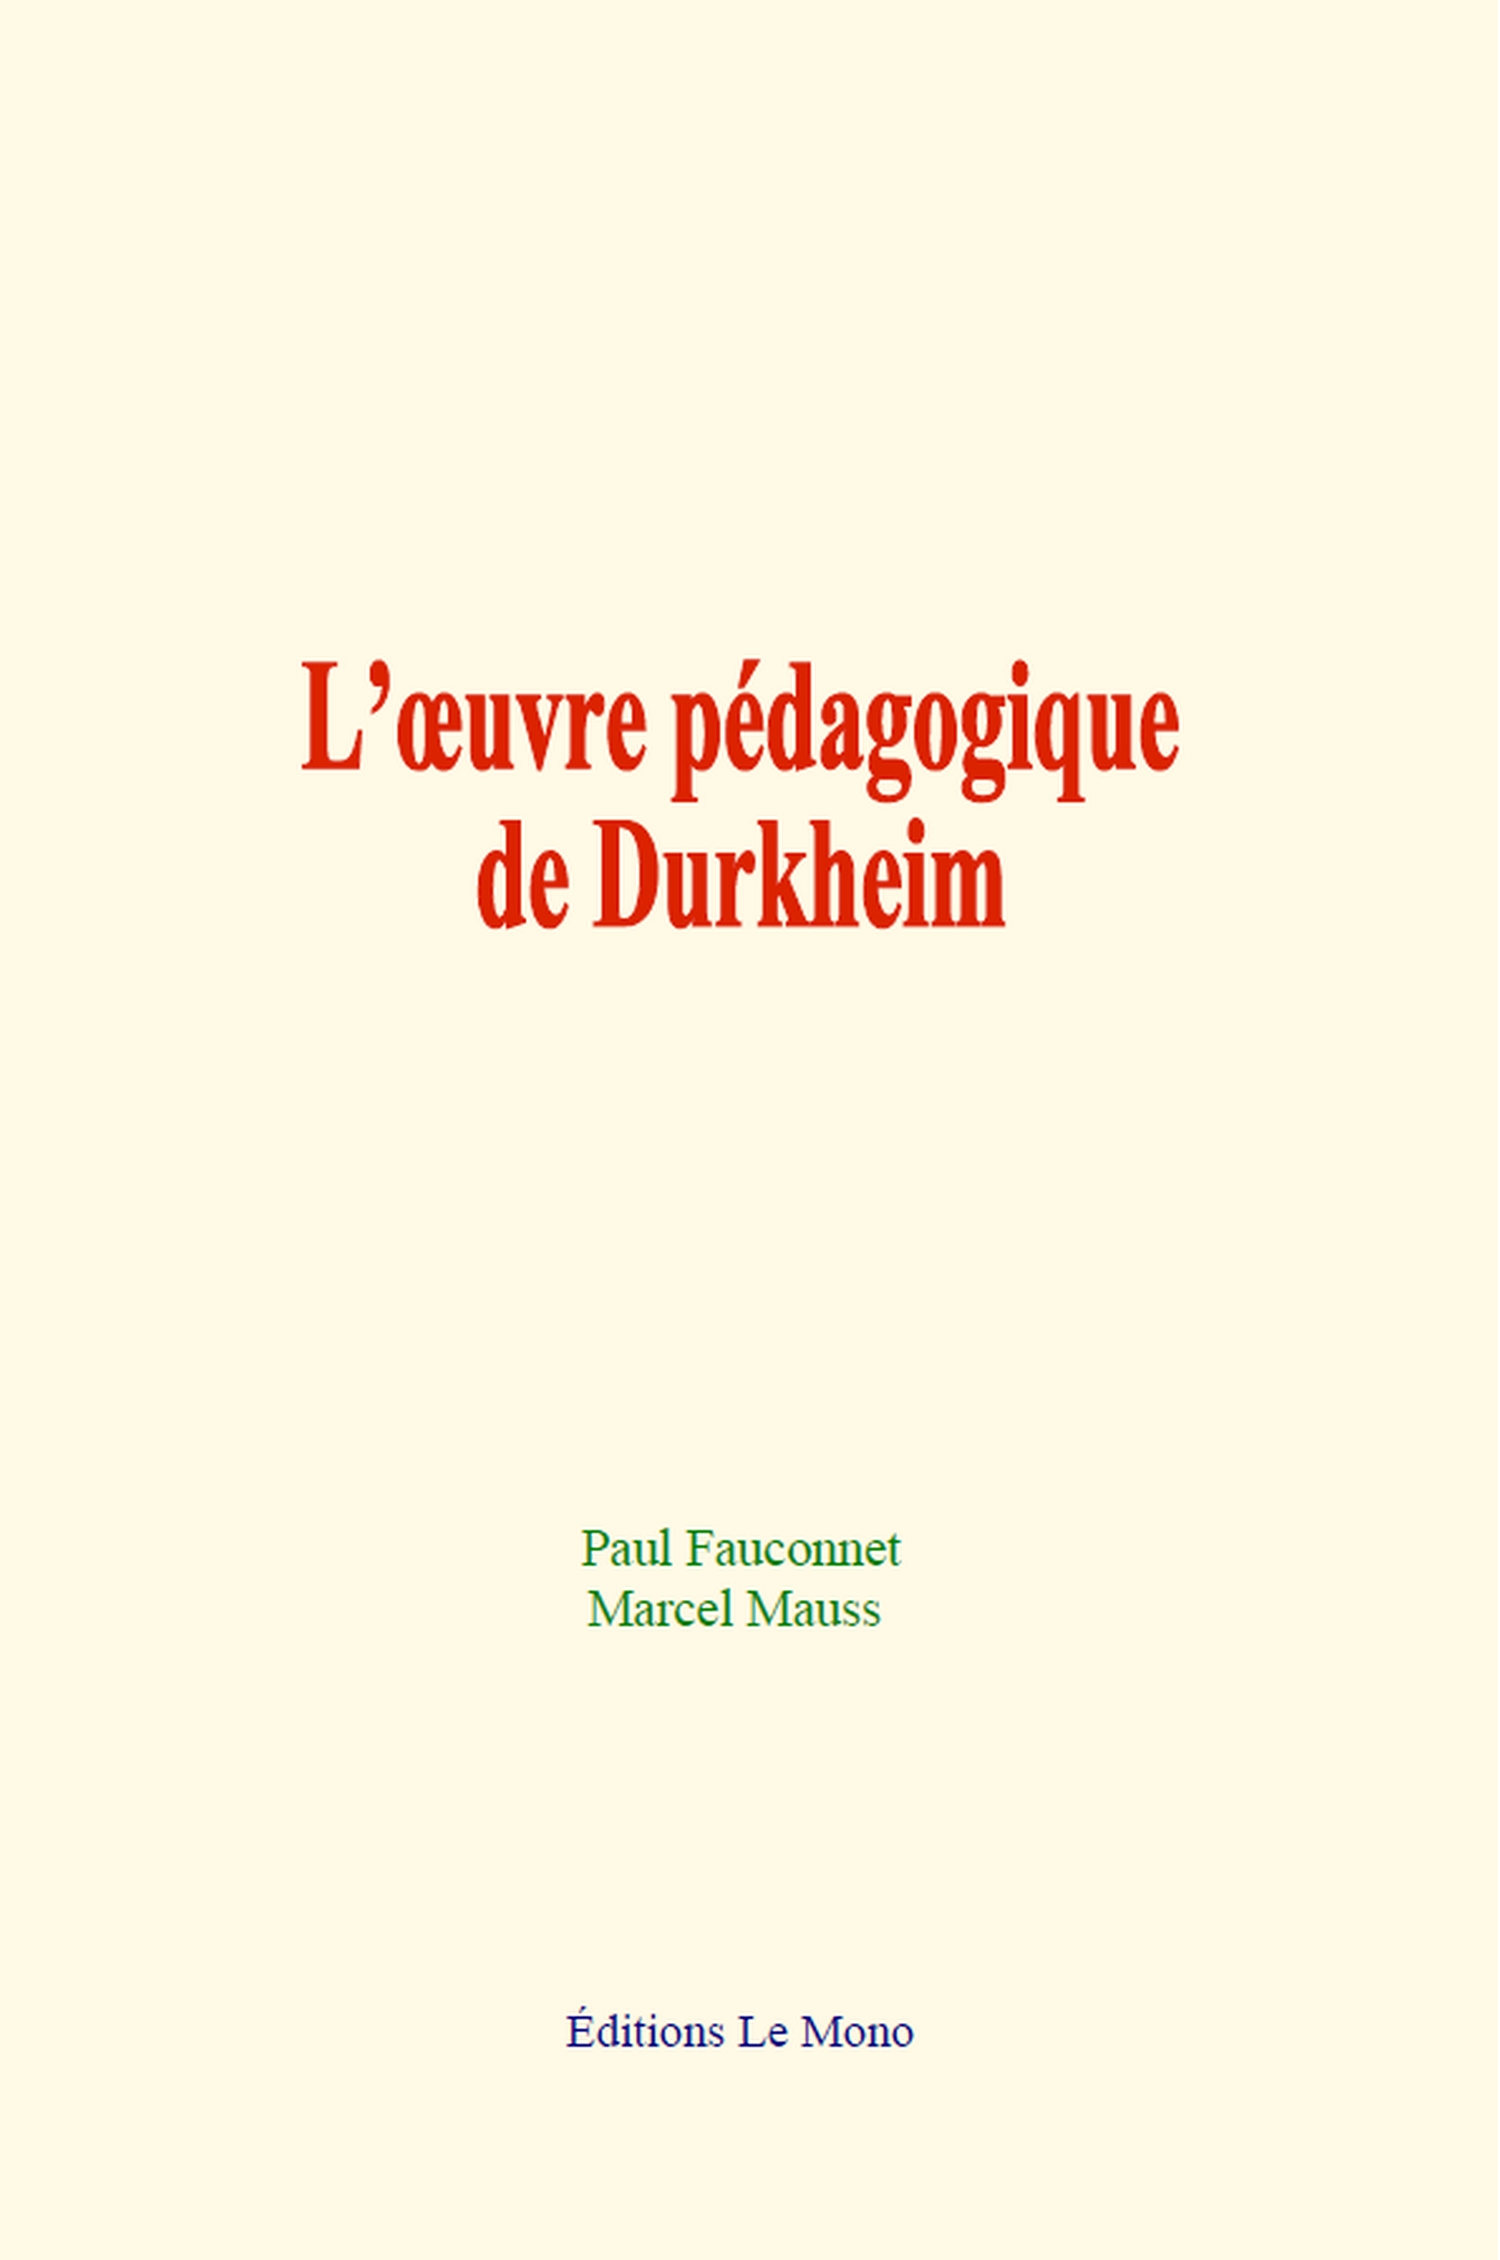 L'oeuvre pedagogique de Durkheim